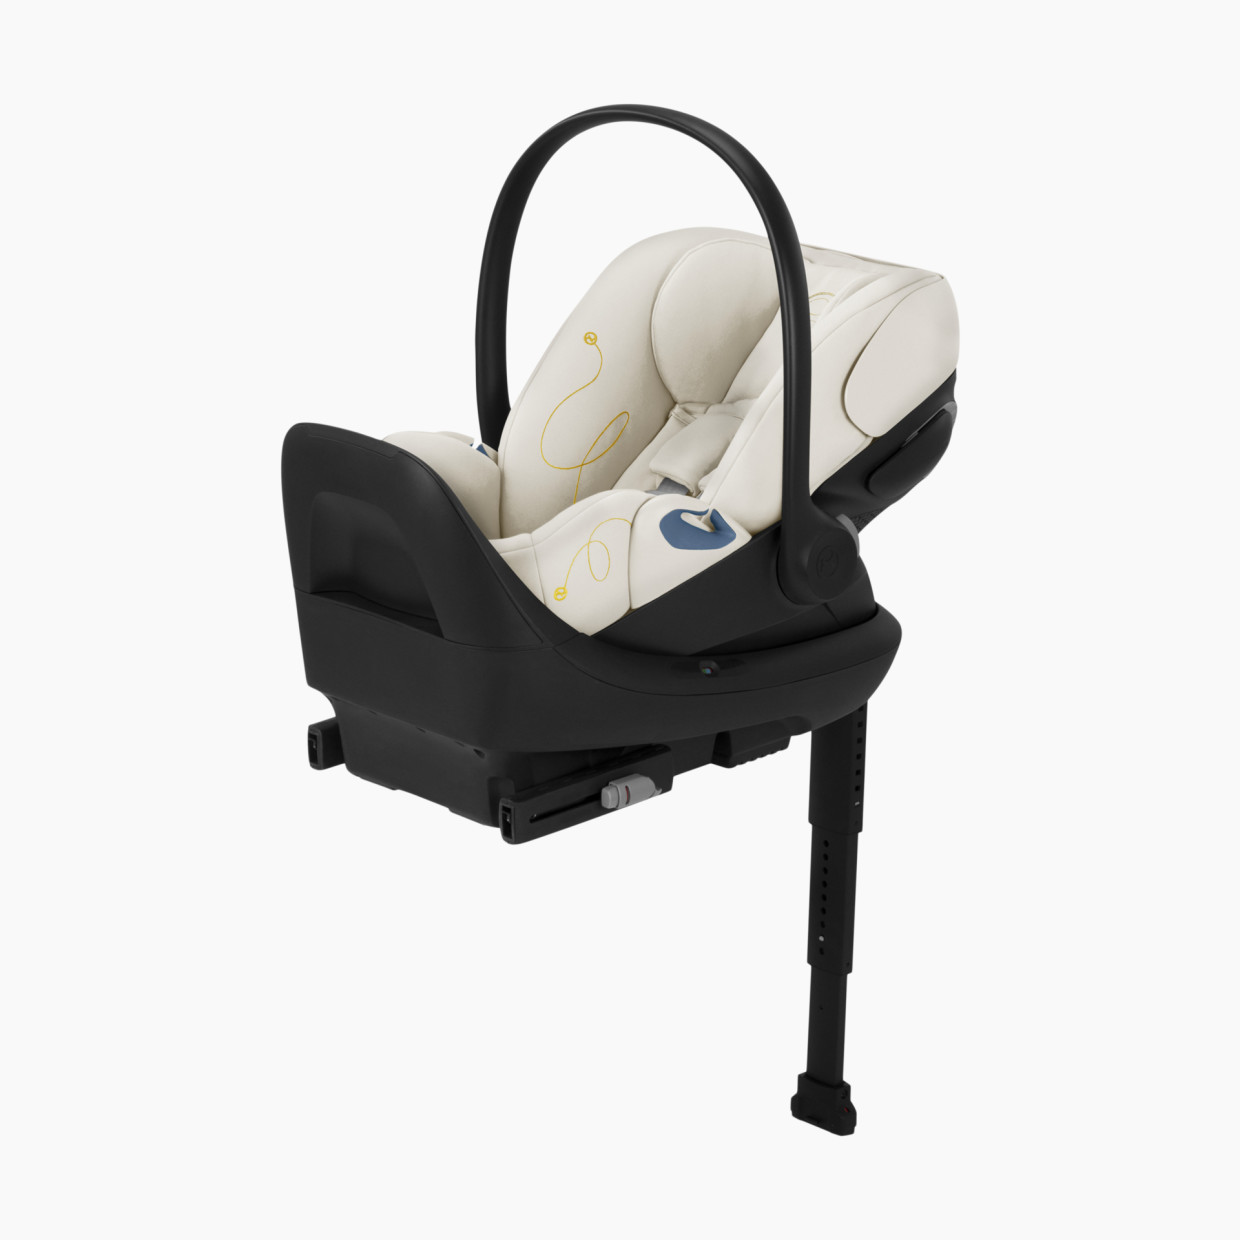 Cybex Cloud G Lux Extend Infant Car Seat - Seashell Beige.